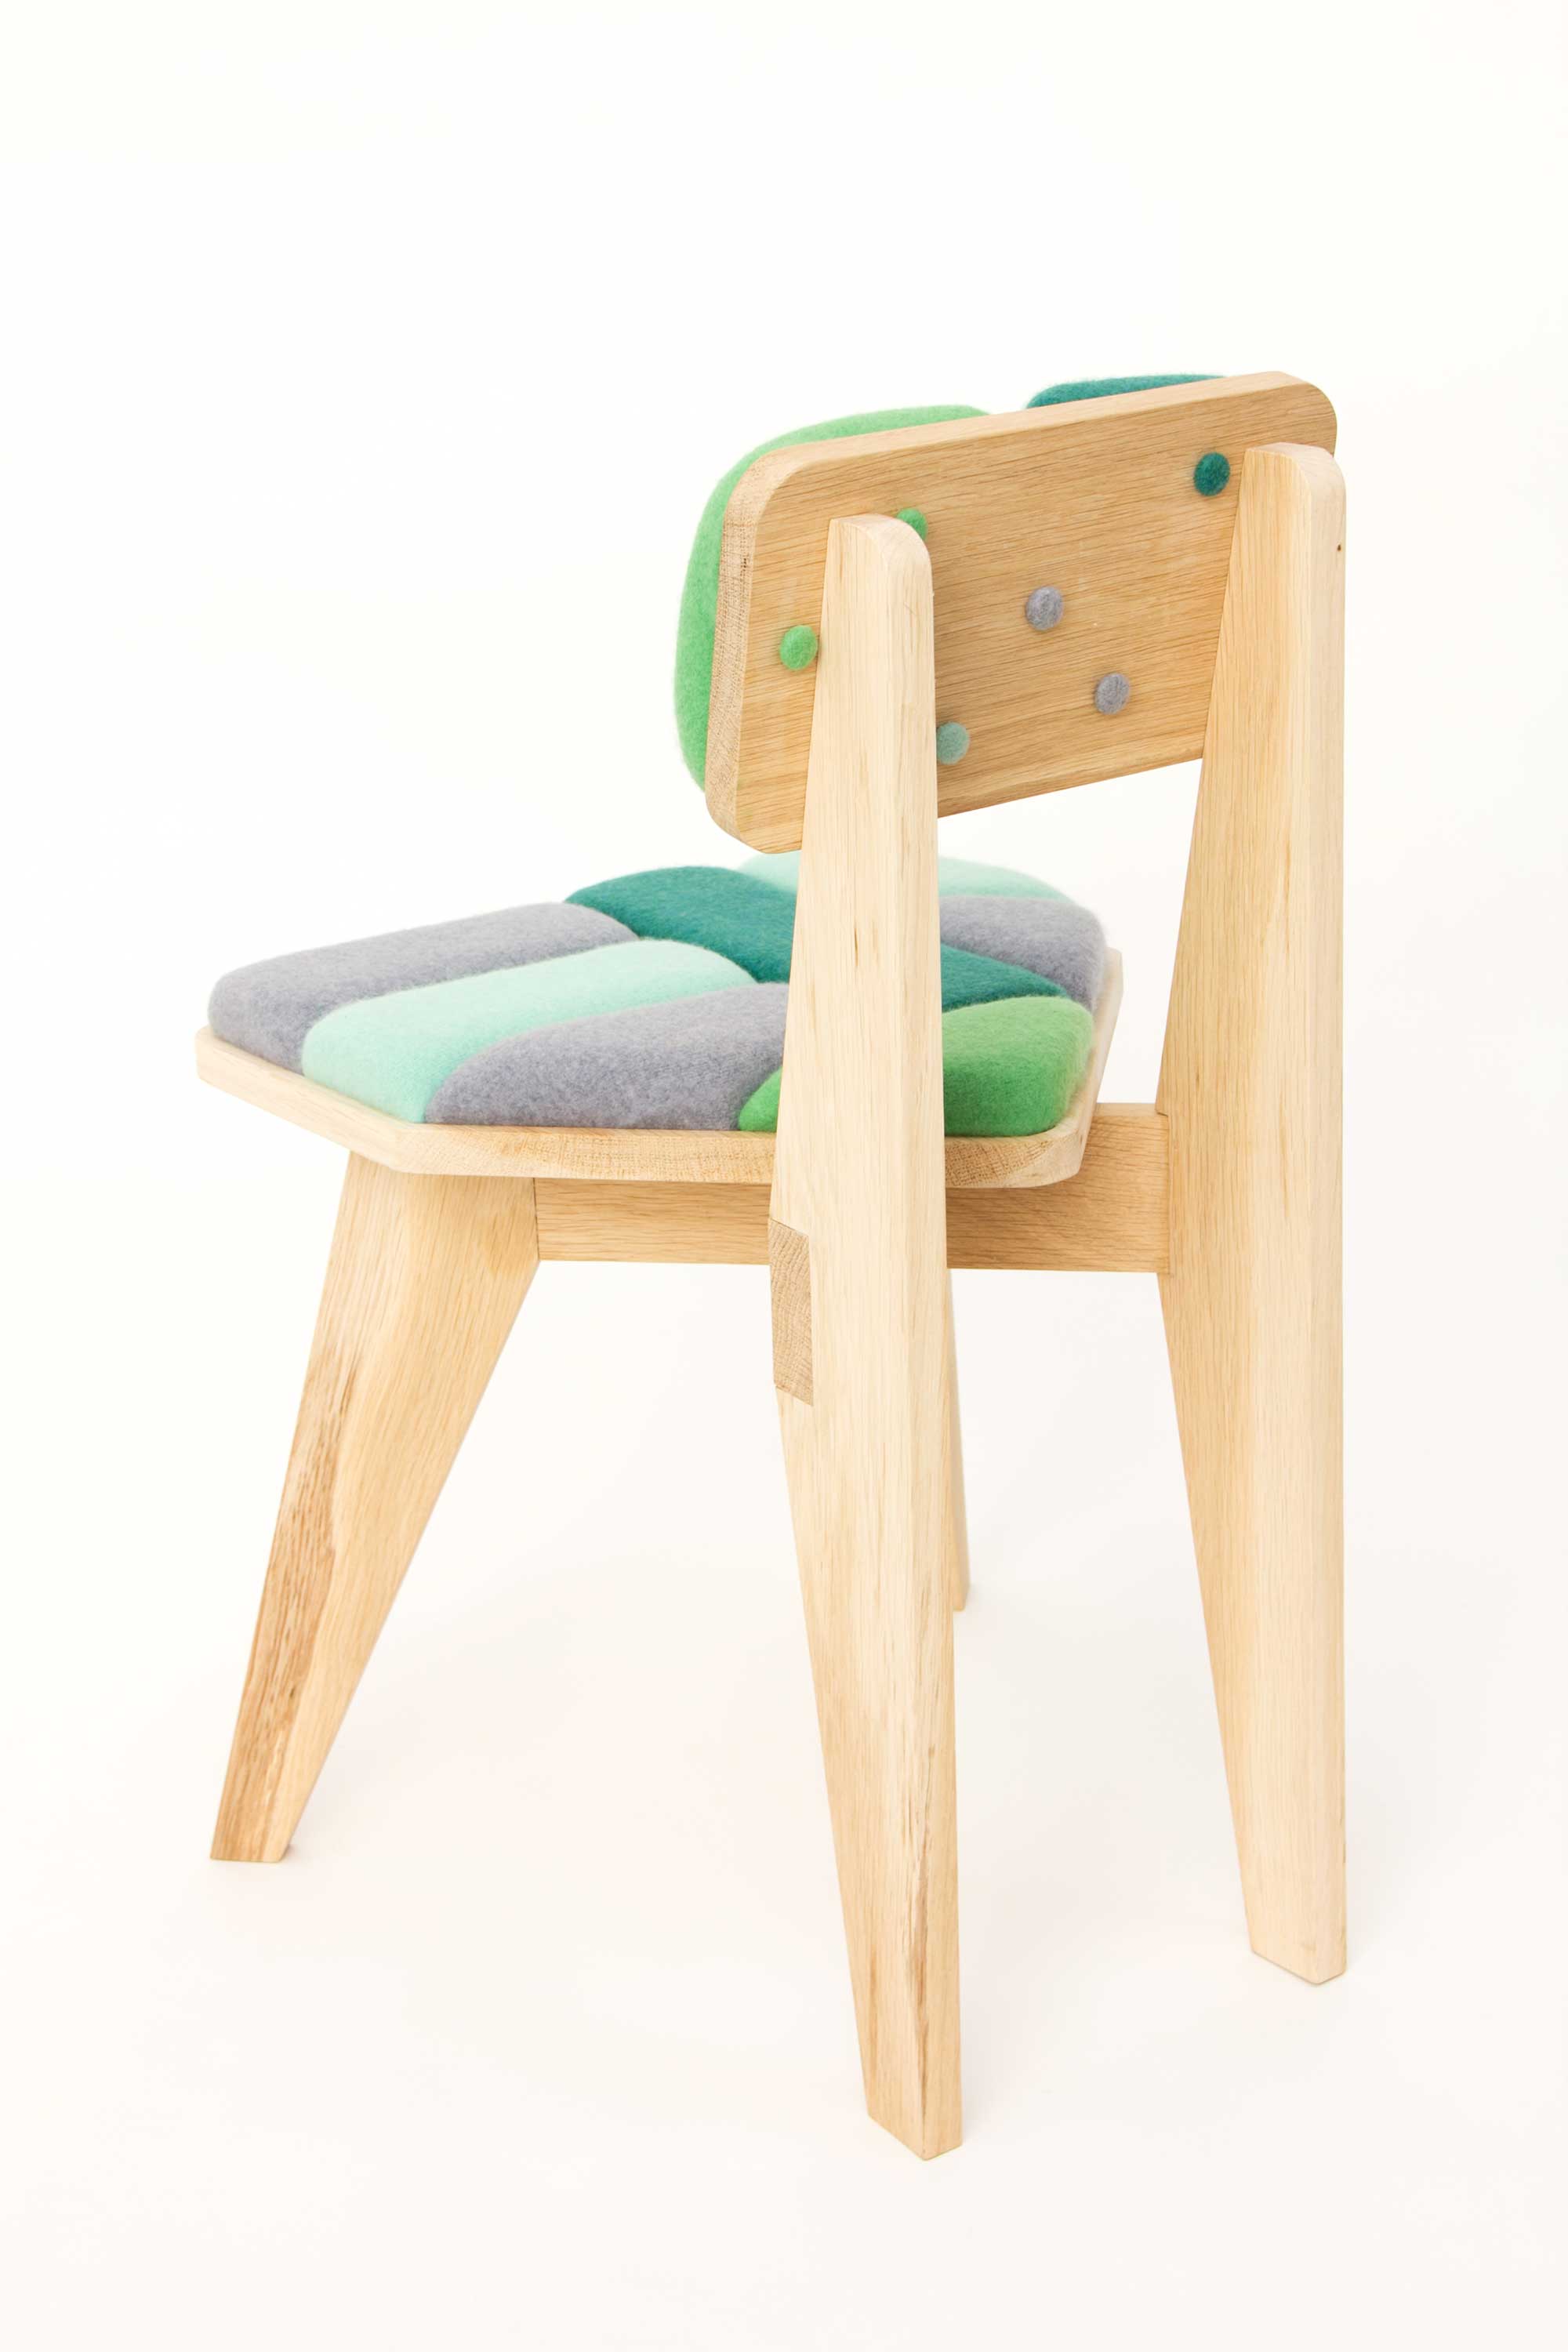 windchair-merel-karhof-_synthetic-green-_-logwood